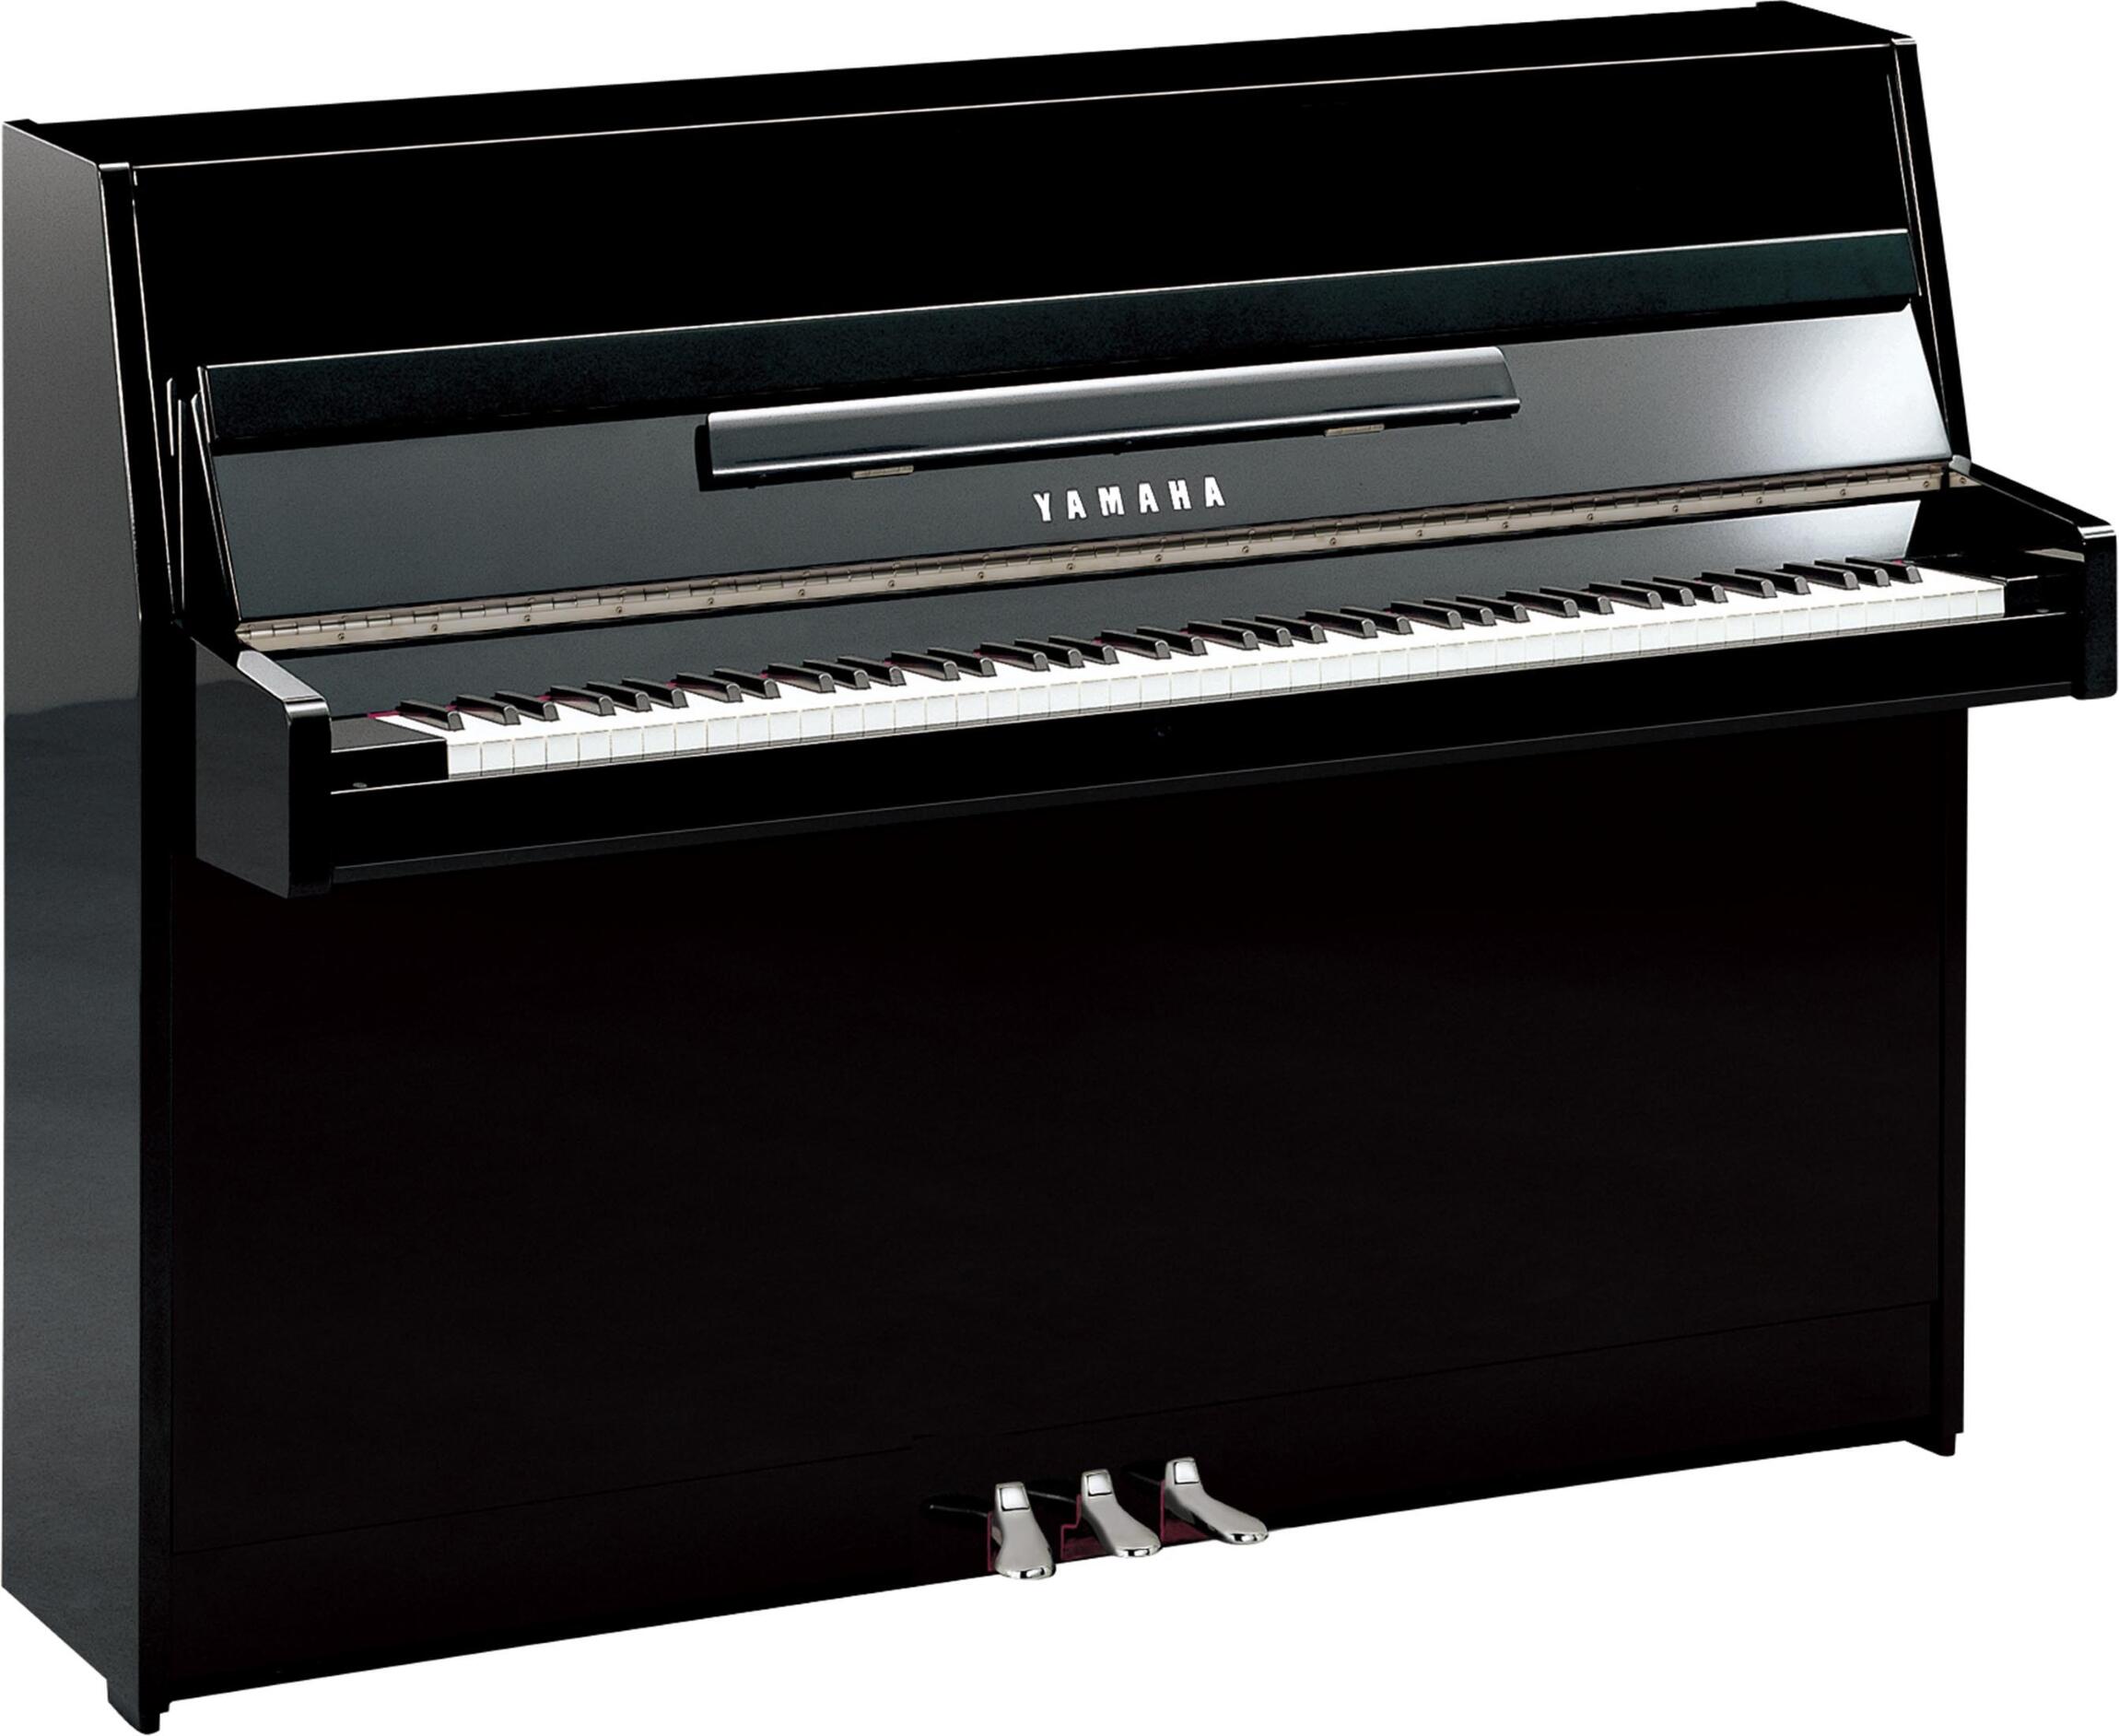 Yamaha Pianos Acoustic B1 PEC Glossy Black Chrome 109 cm : photo 1